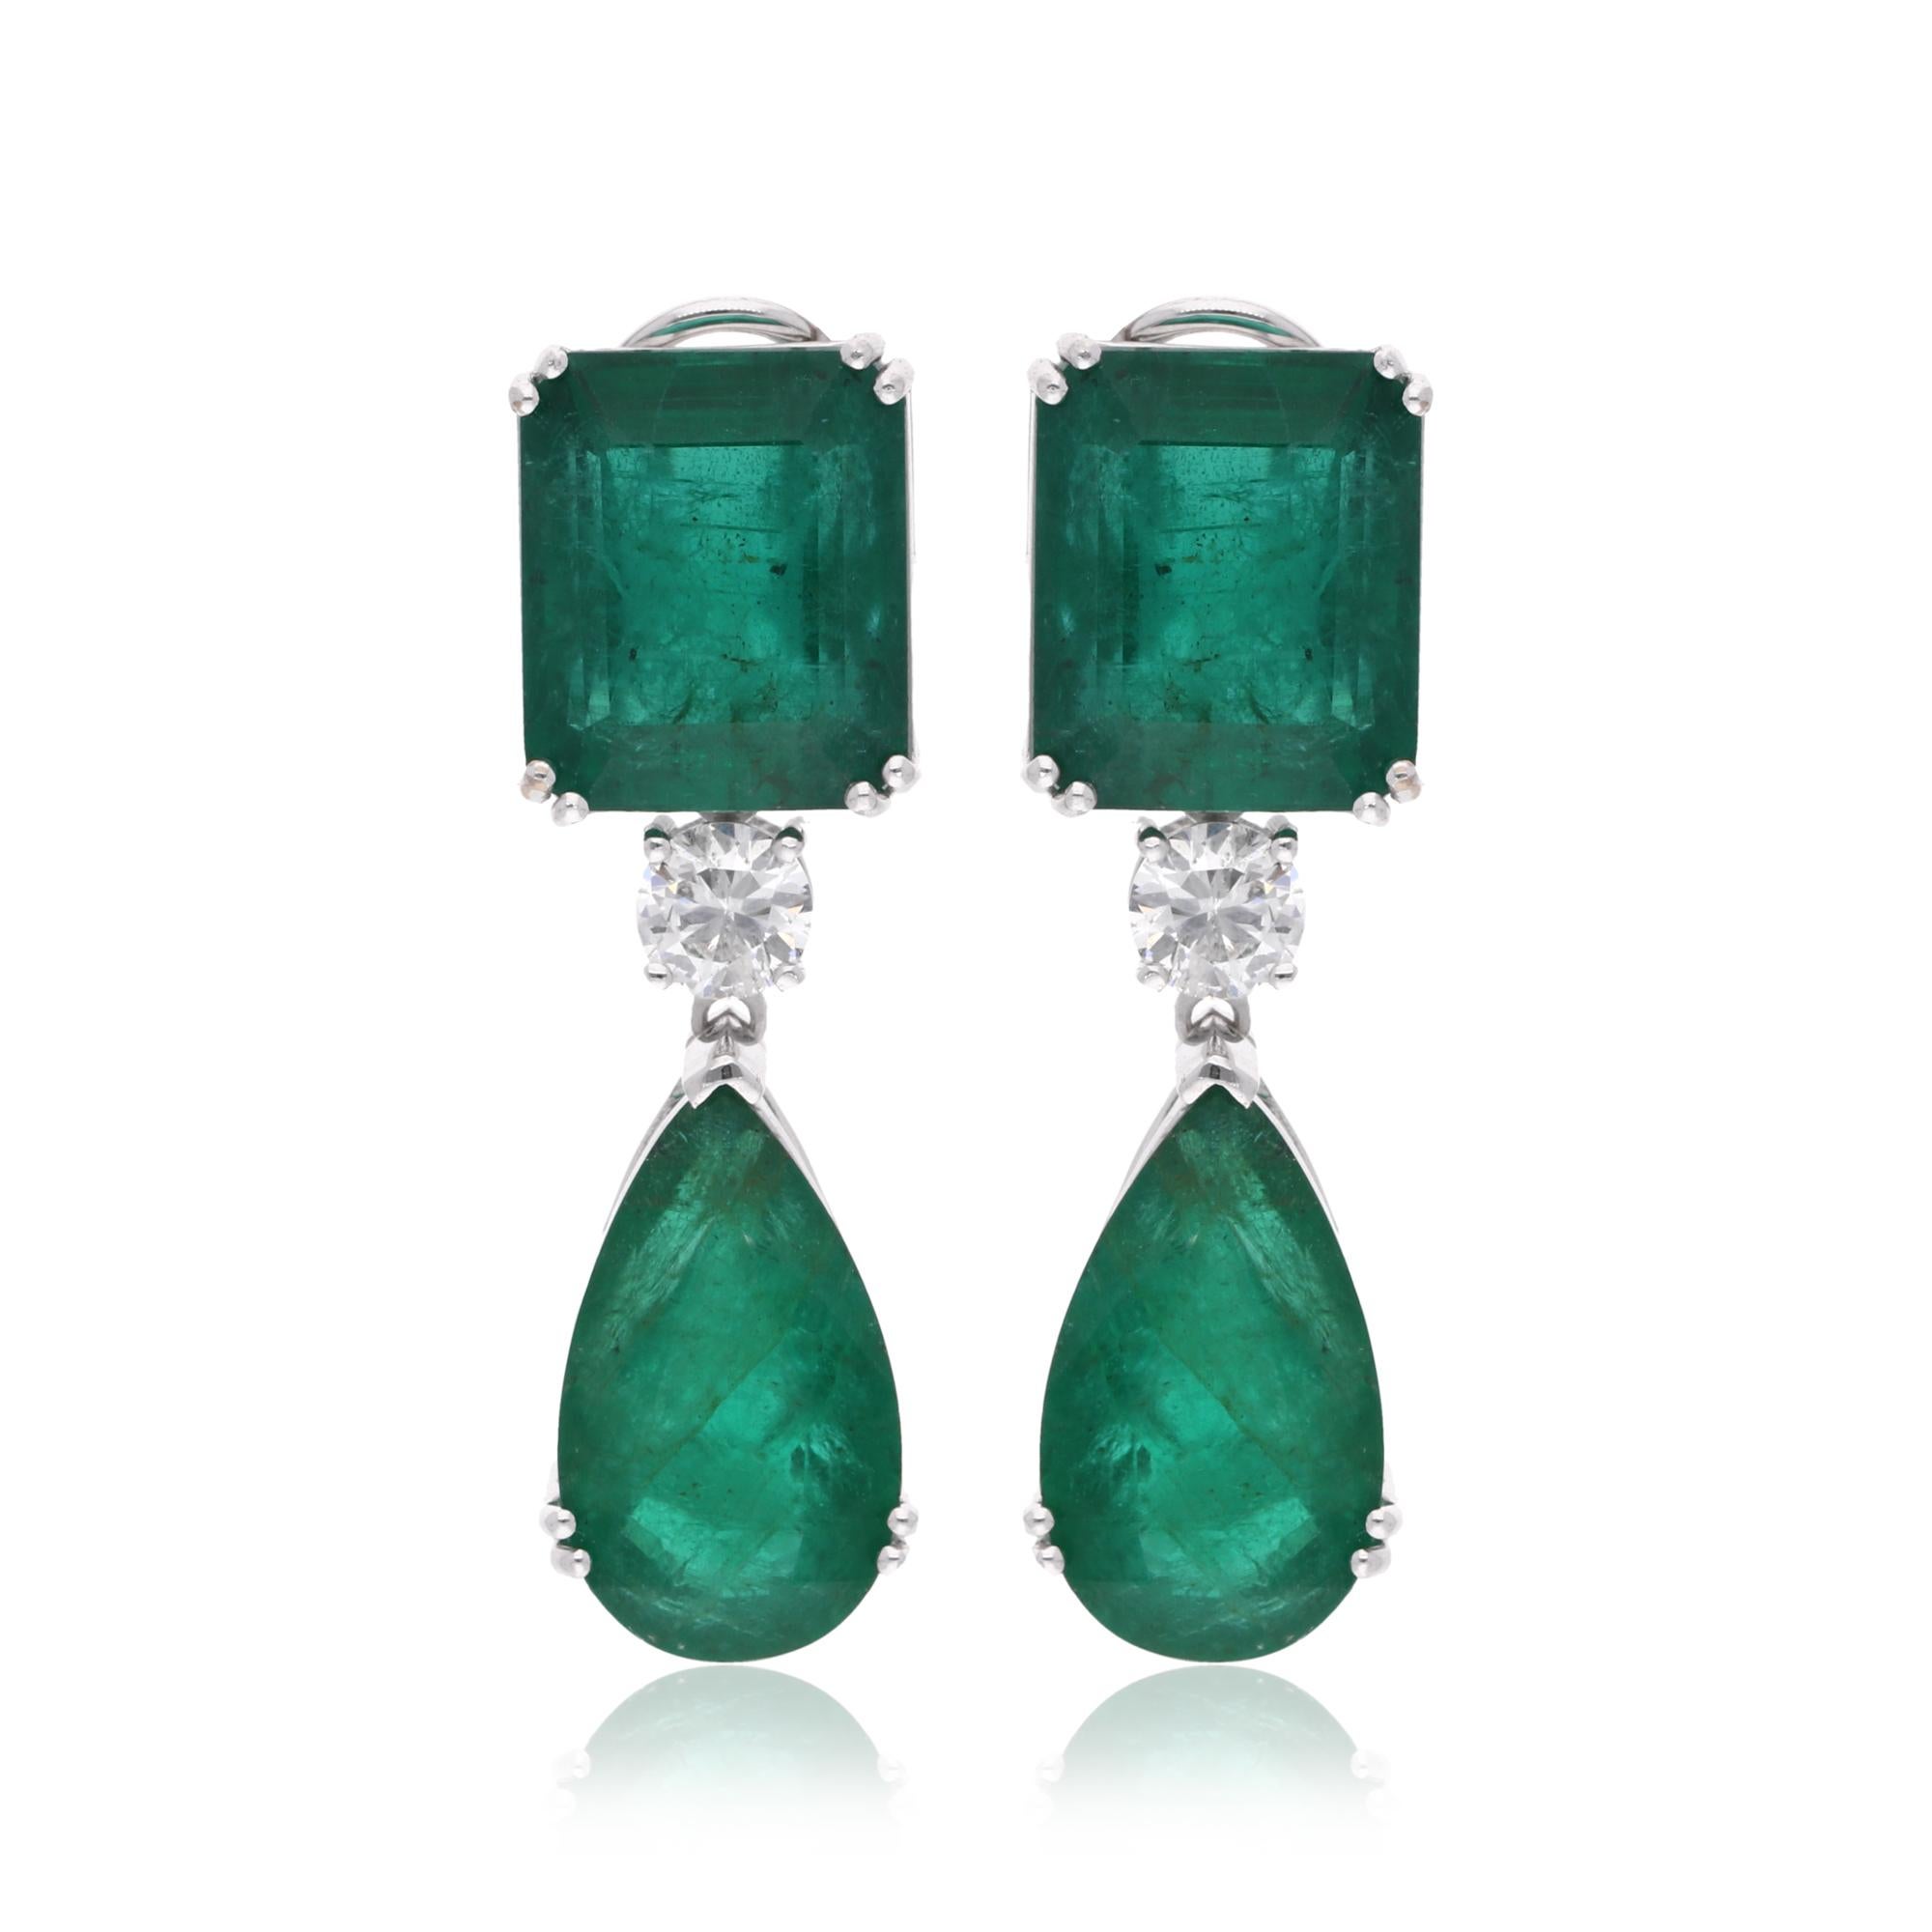 Natural Emerald Gemstone Dangle Earrings Diamond 18 Karat White Gold Jewelry